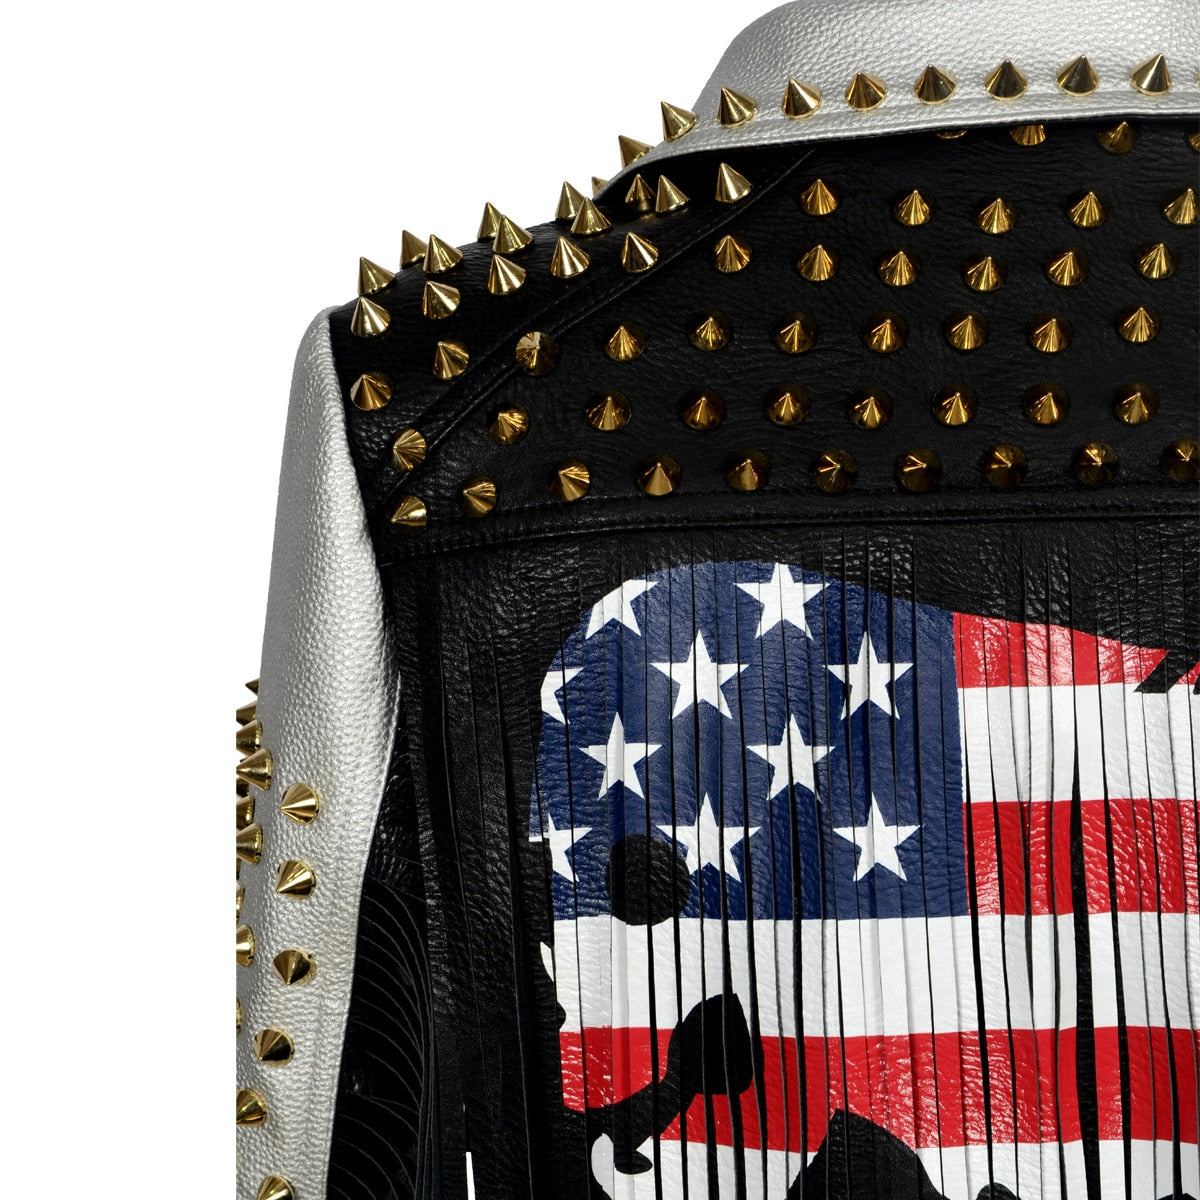 3XL Black & White Patchwork Faux Leather Biker Jacket w/ Punk Spike Embellishings Plus Size Women